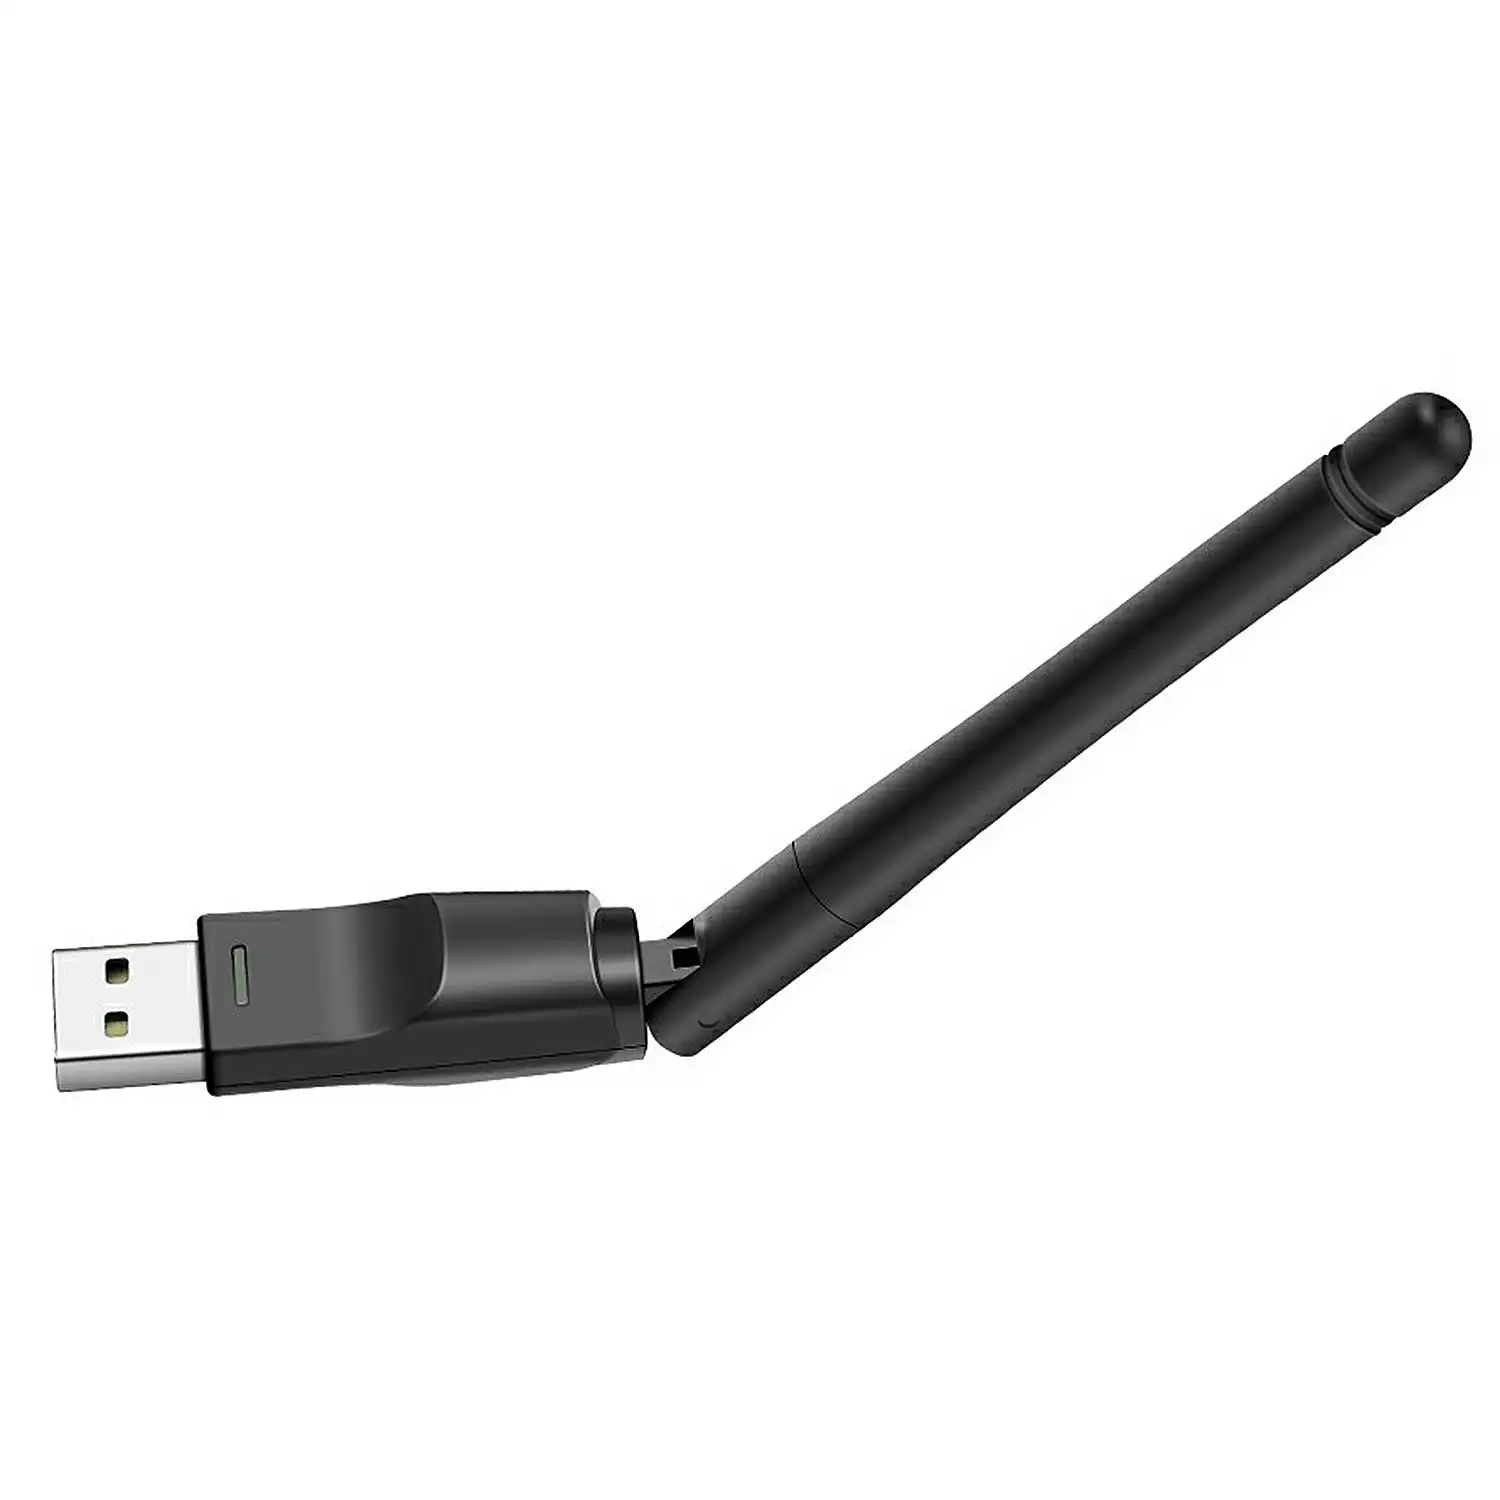 Adaptor USB Gaming WiFi, Dongle nirkabel 5Ghz USB 3.0 penerima WiFi 2 In 1 untuk Windows 10 11